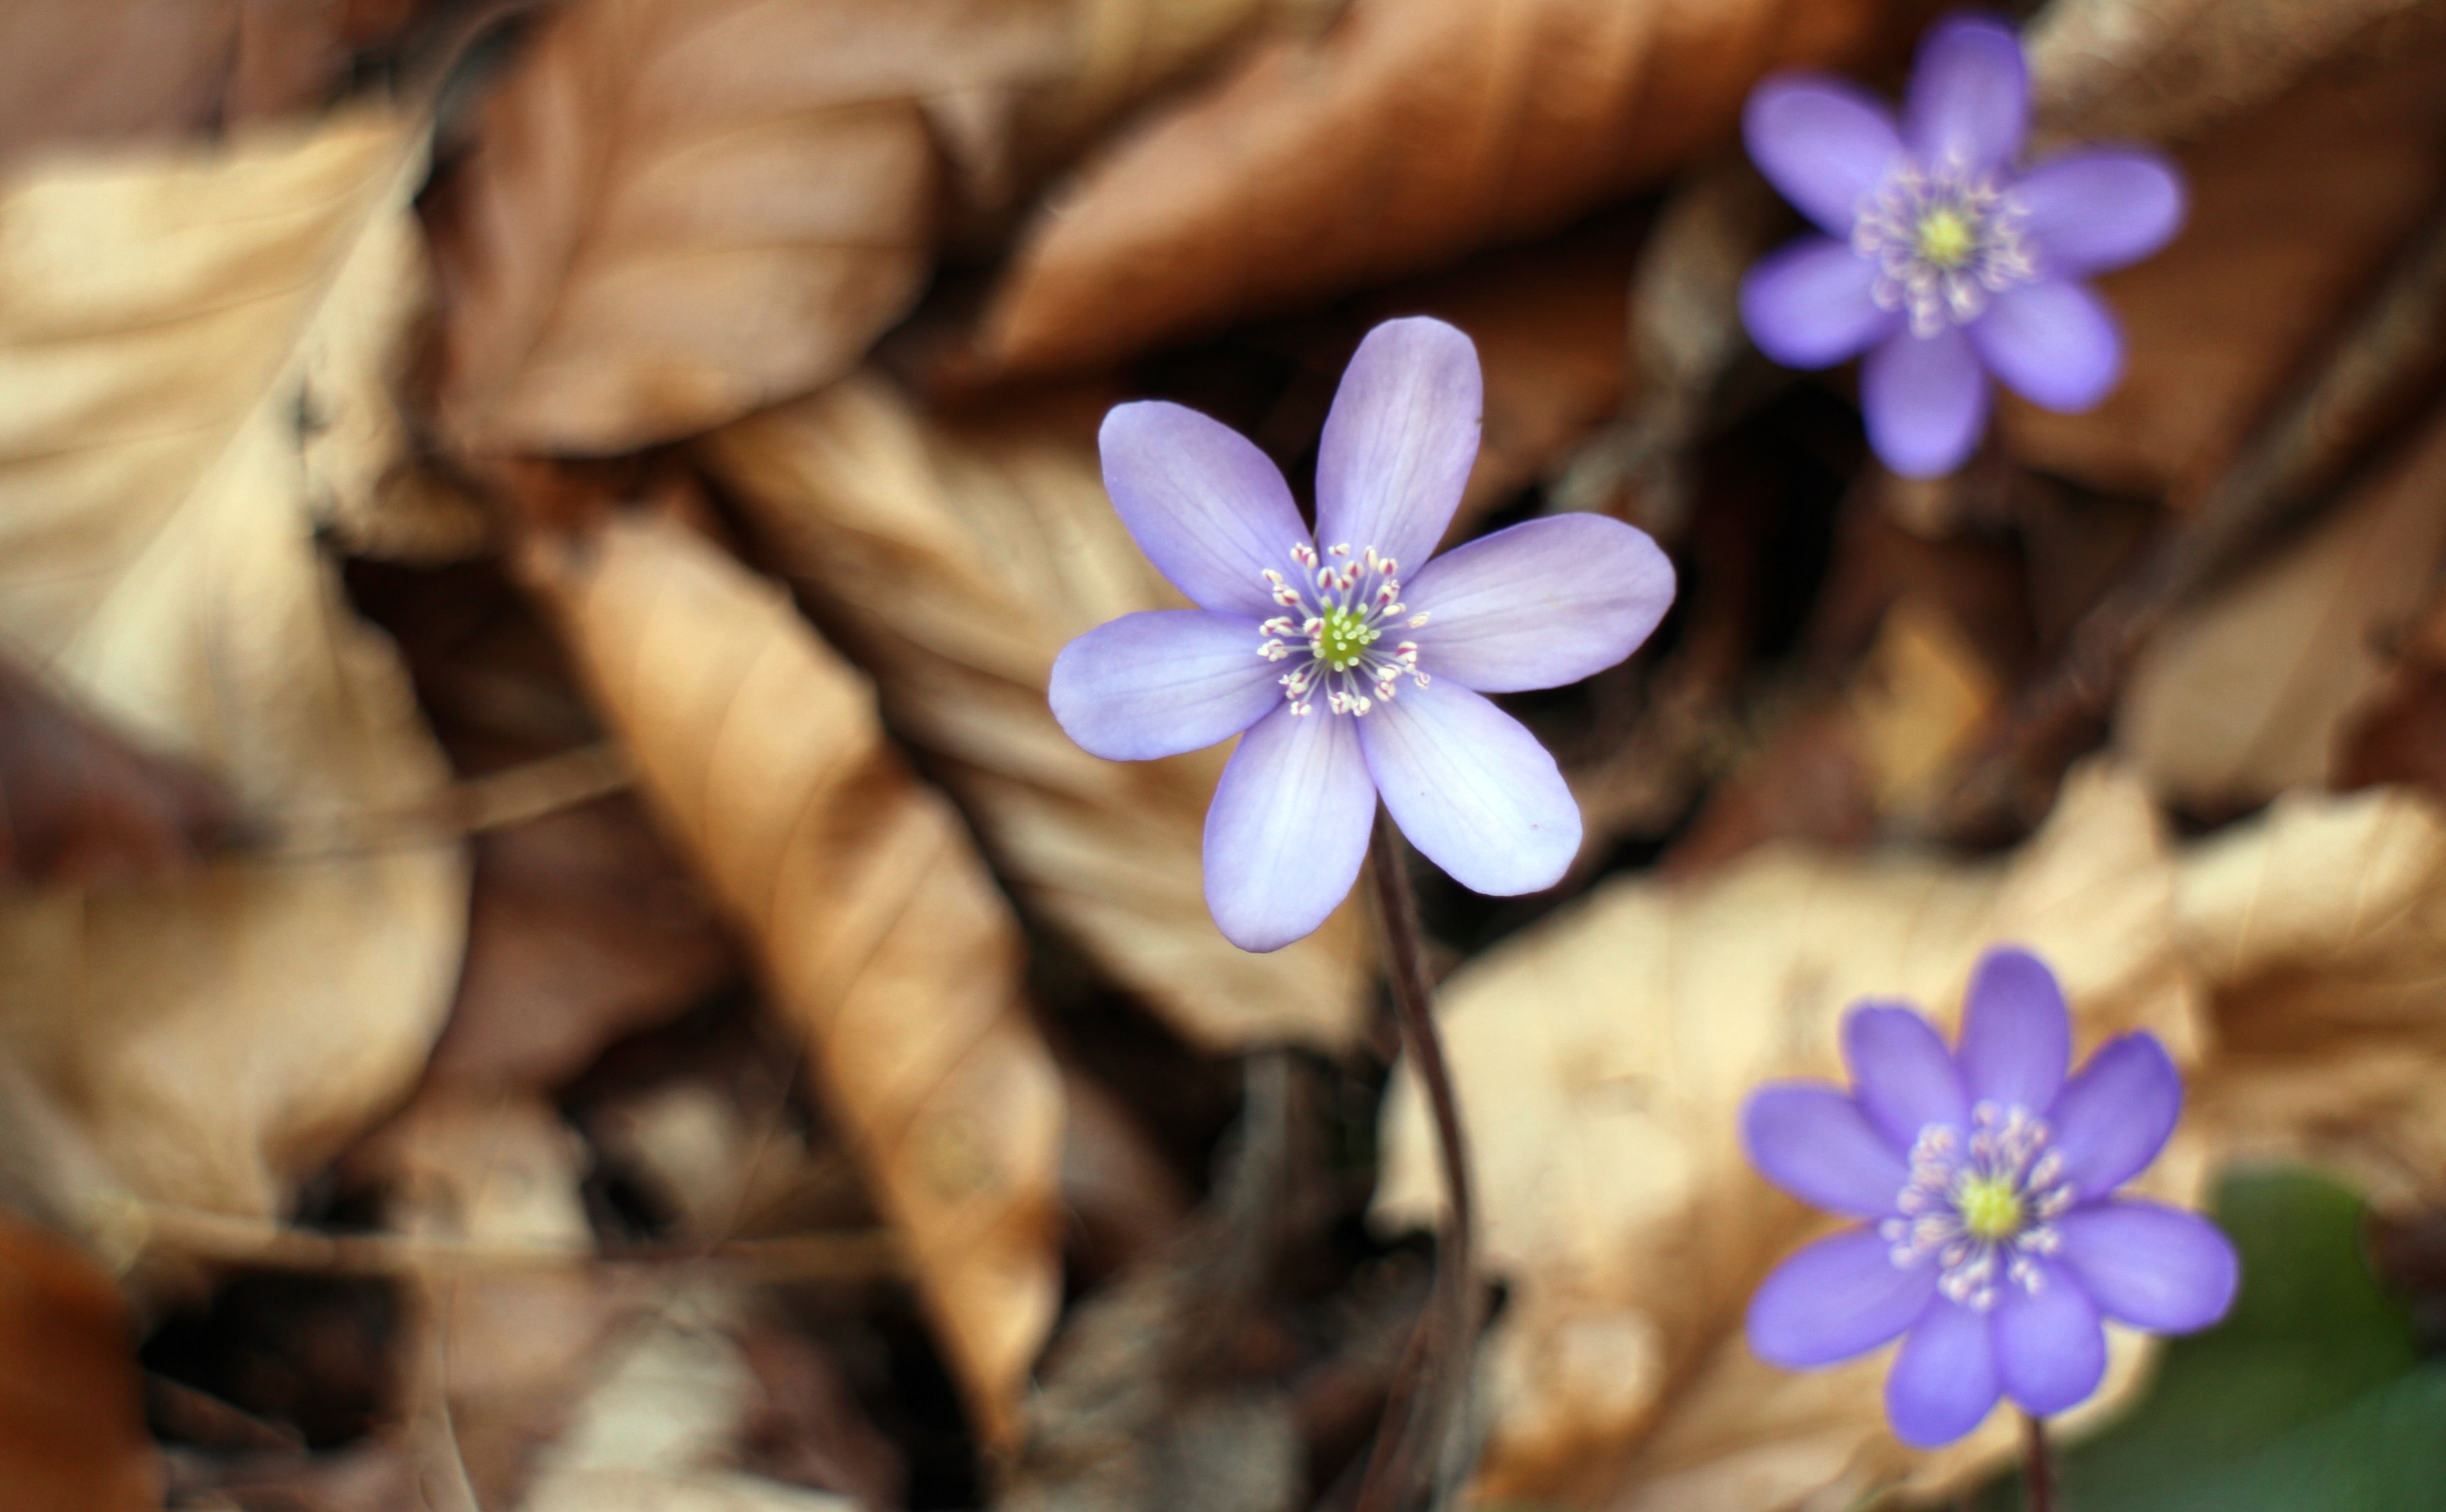 3 purple 5 petal flowers